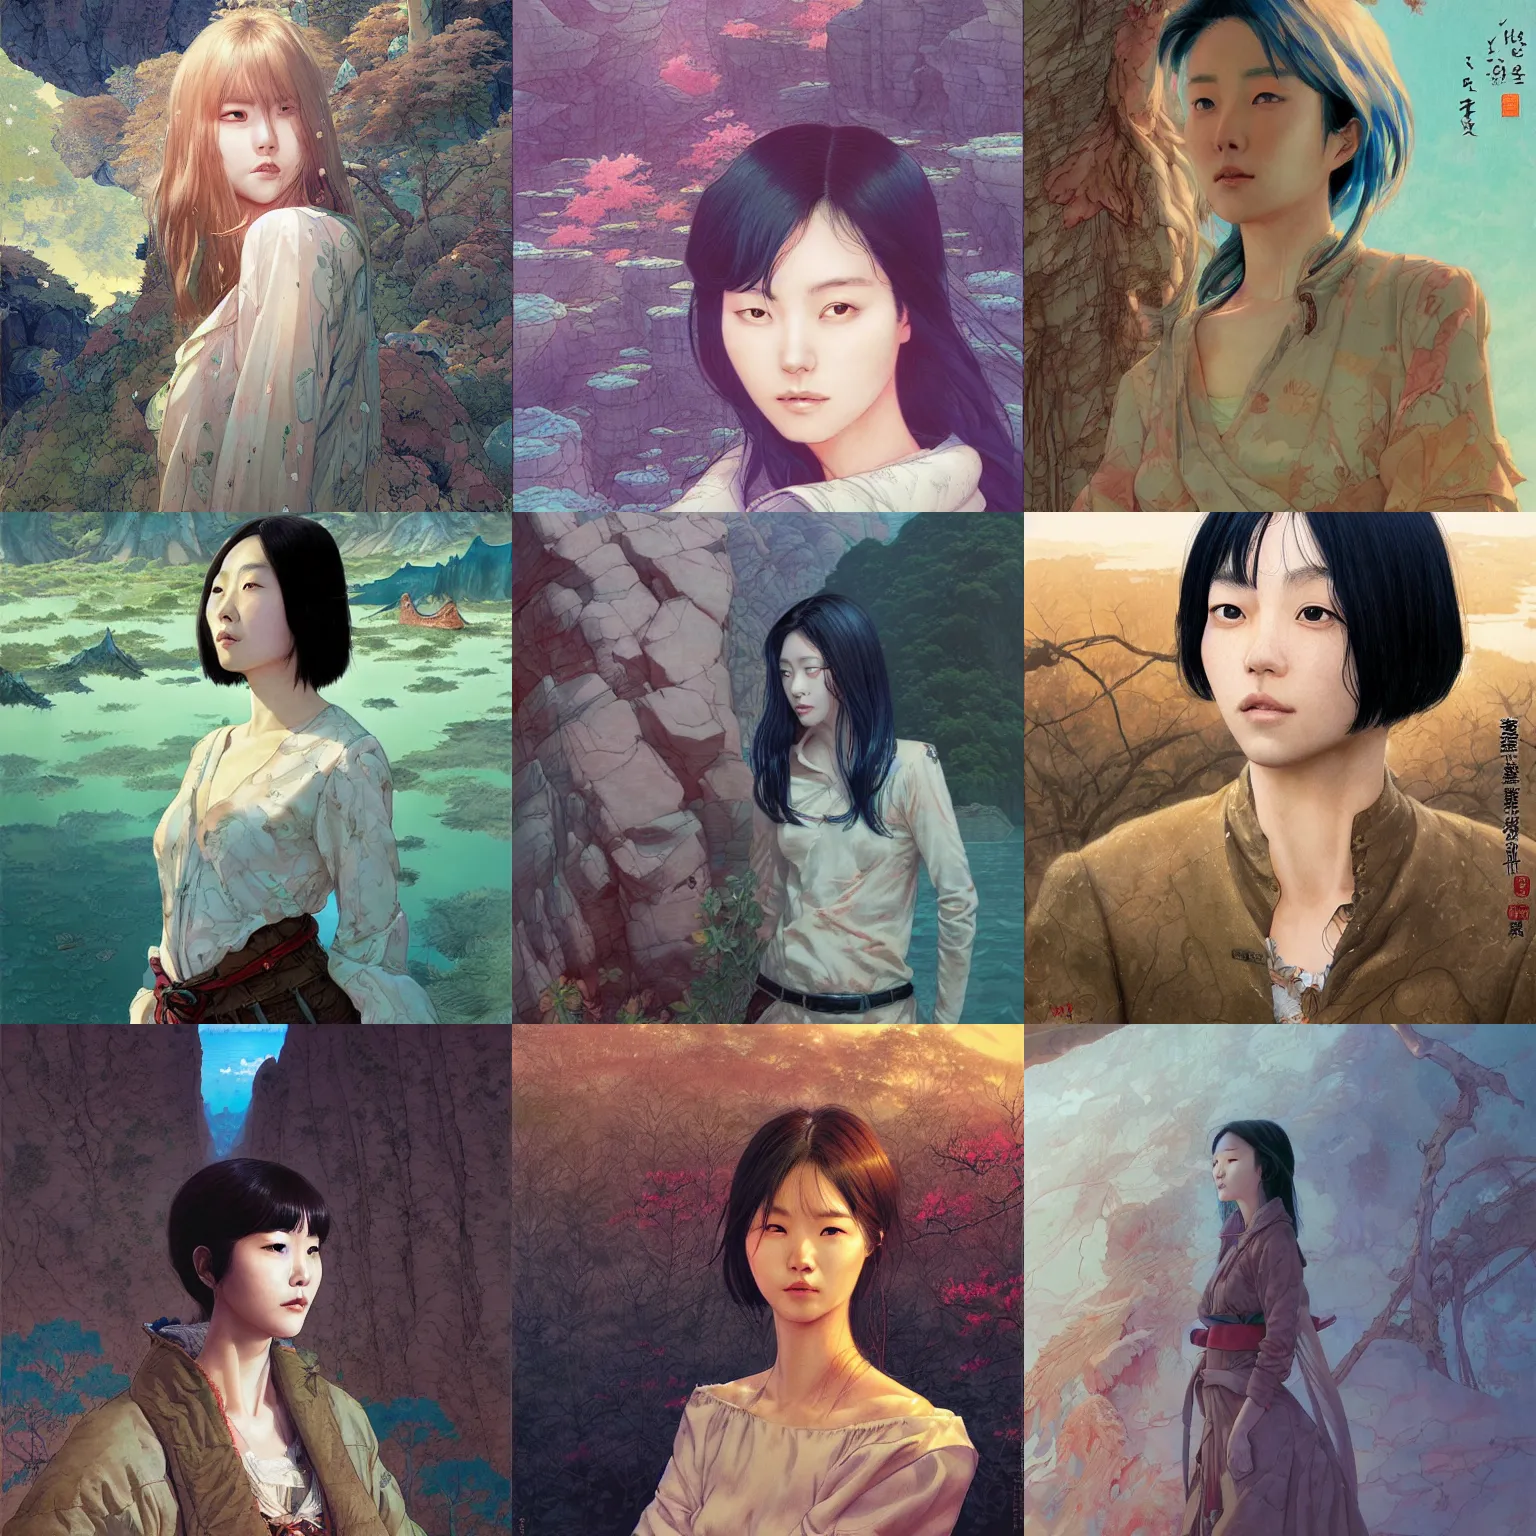 Prompt: portrait of lee jin - eun in a scenic environment by amano yoshitaka, marc simonetti, jean giraud, martine johanna, josan gonzalez